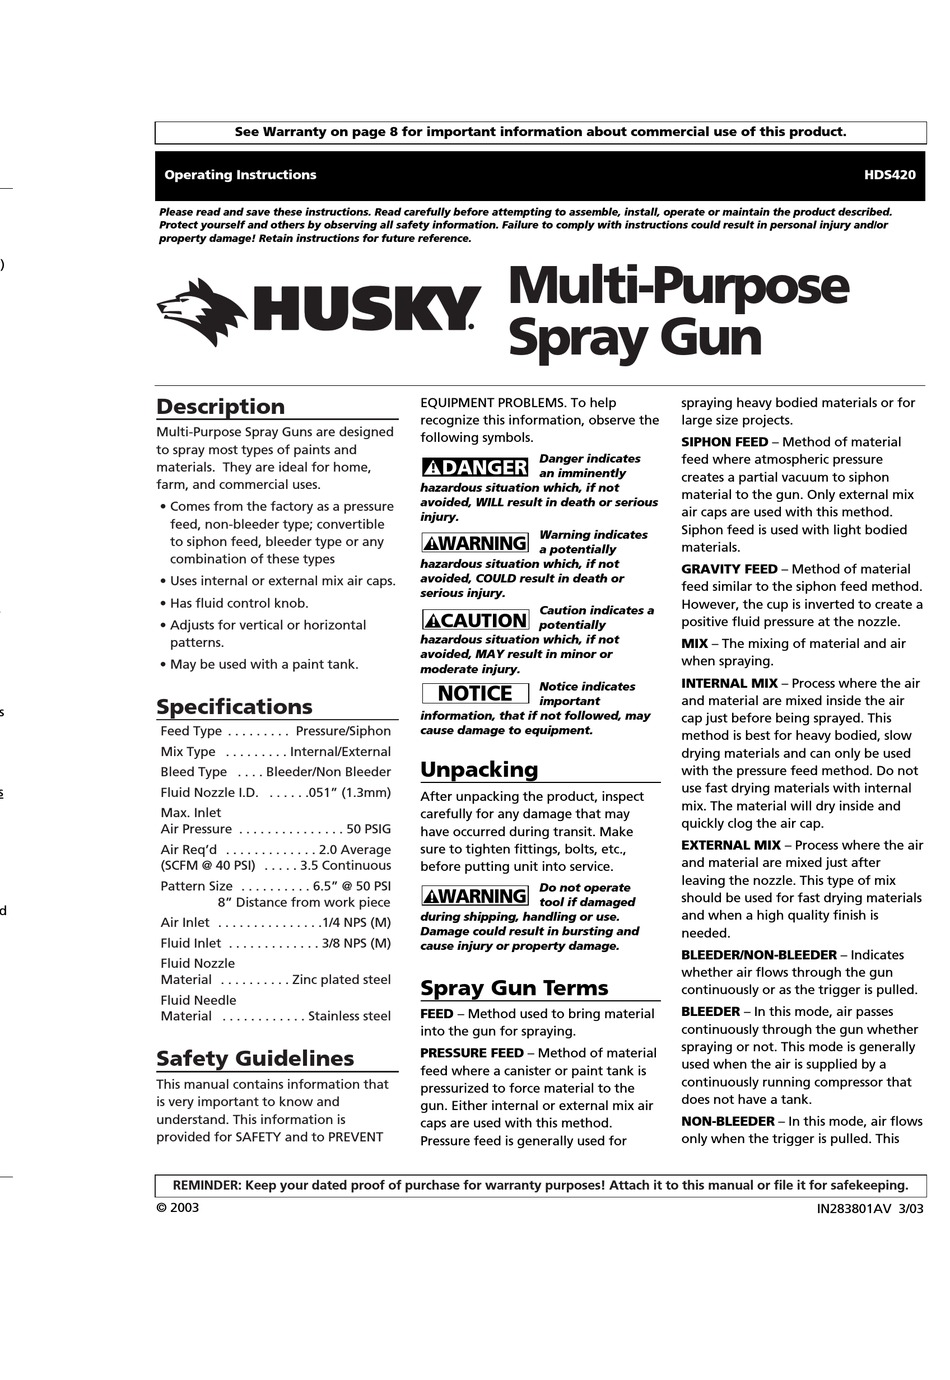 are different tip sizes for husky hvlp spray gun